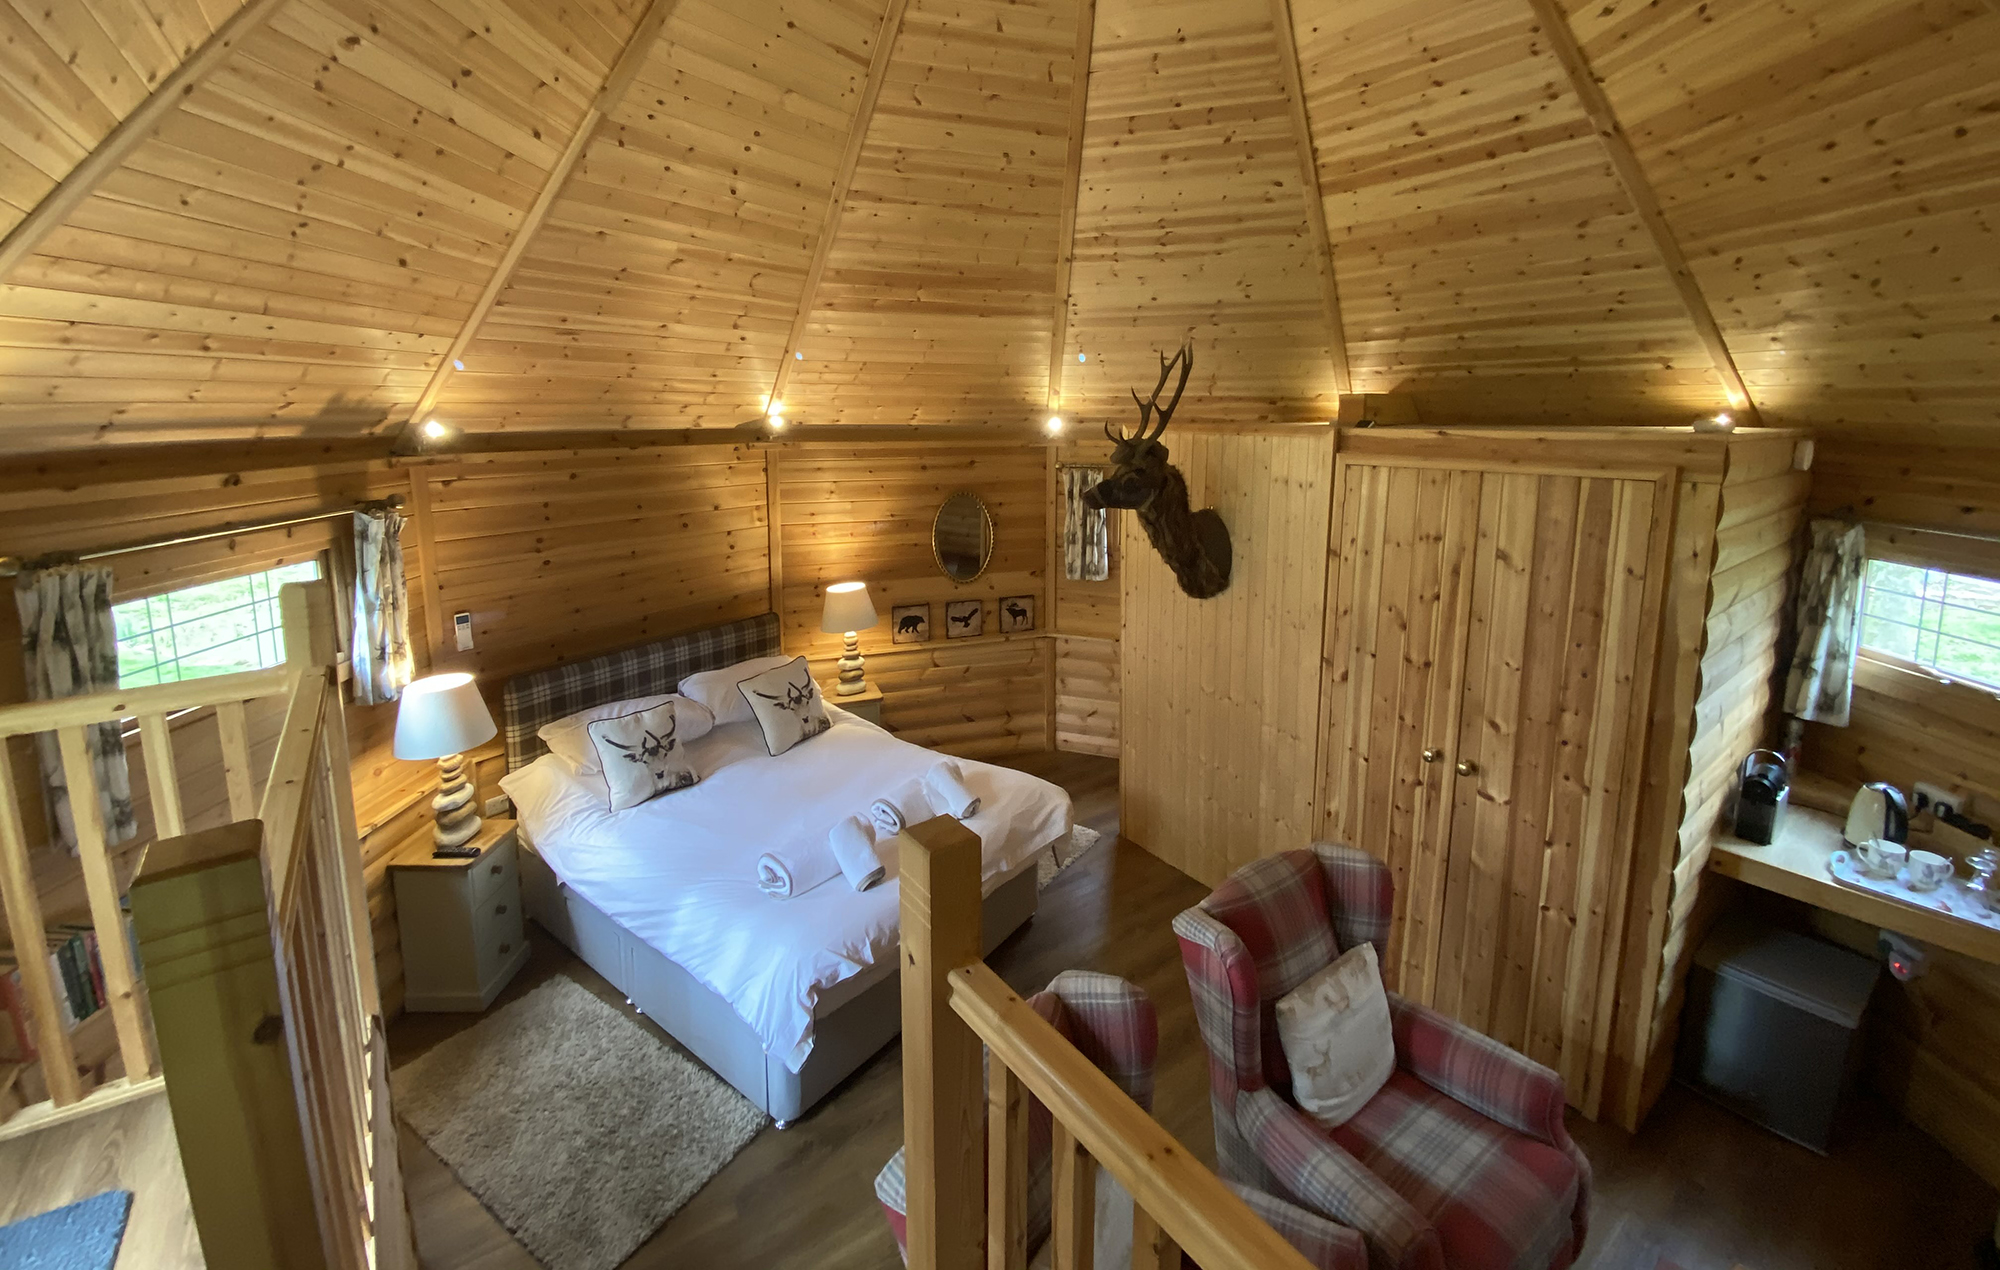 arctic-cabins-uses-a-z-home-studio-yoga-garden-room